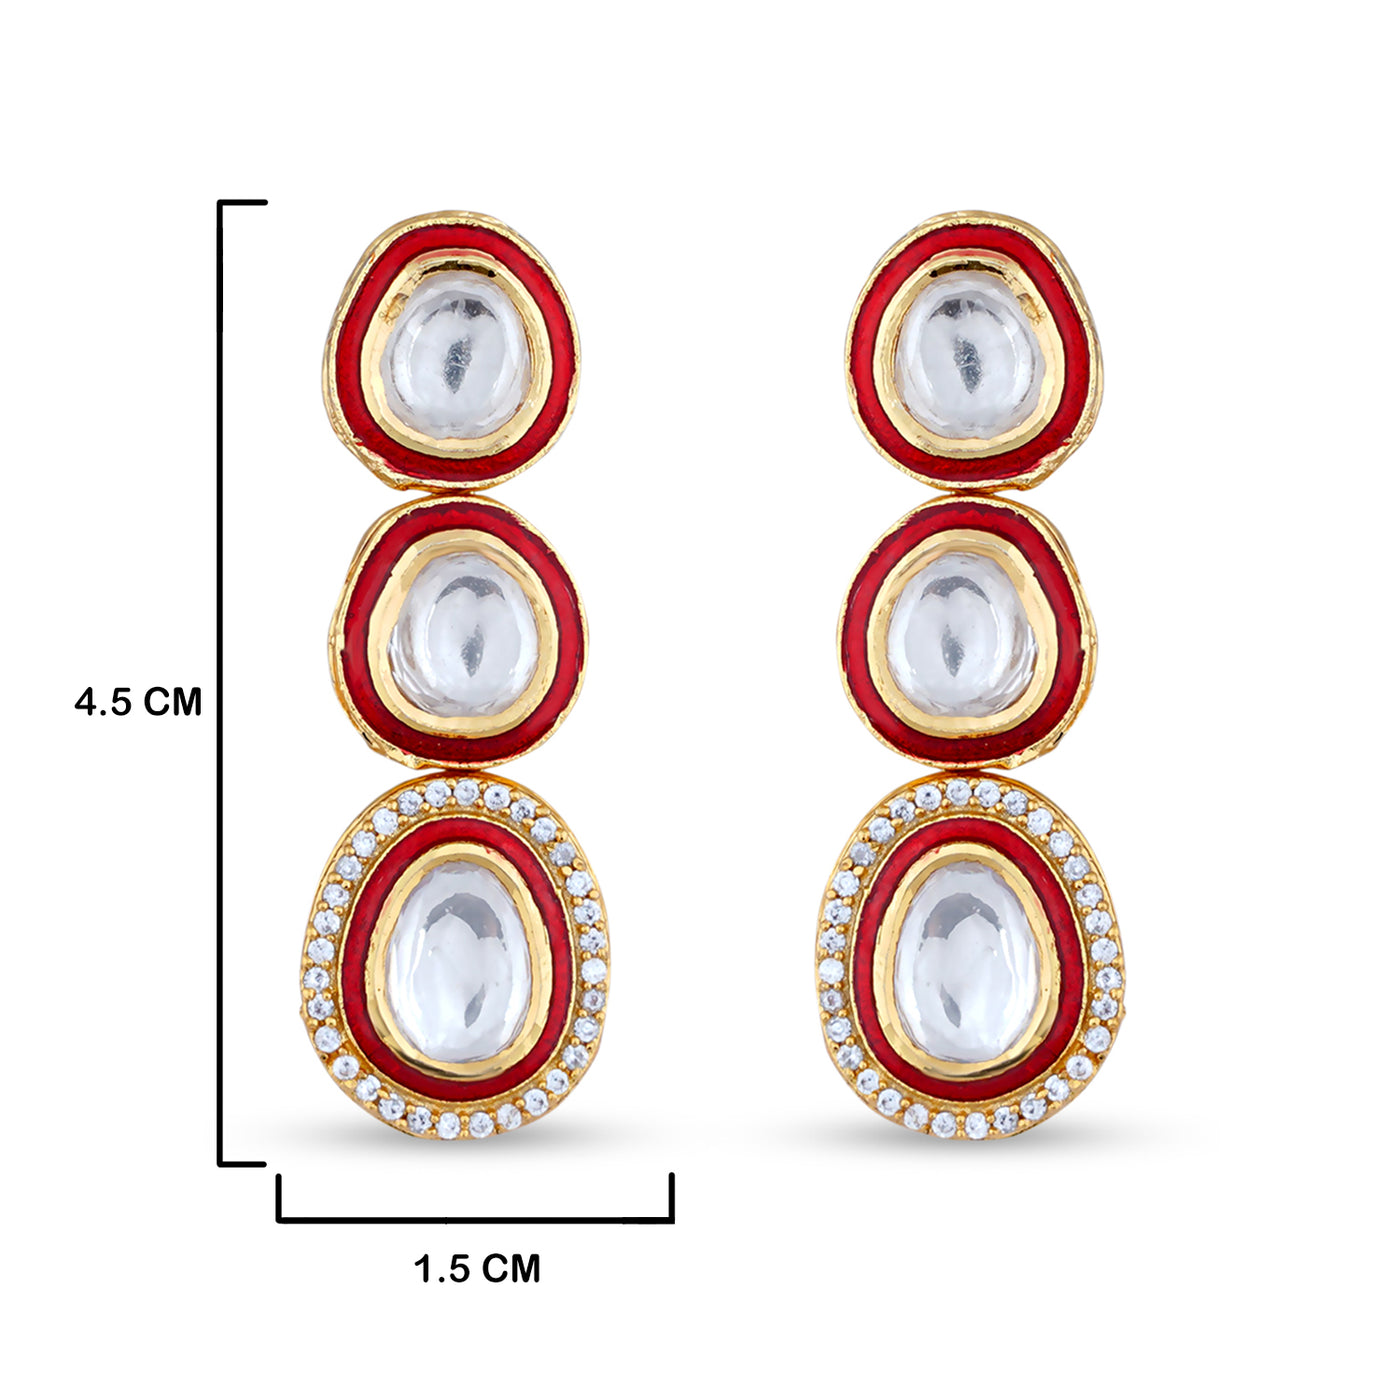 Polki Red Kundan Dangle Earrings with measurements in cm. 4.5cm by 1.5cm.